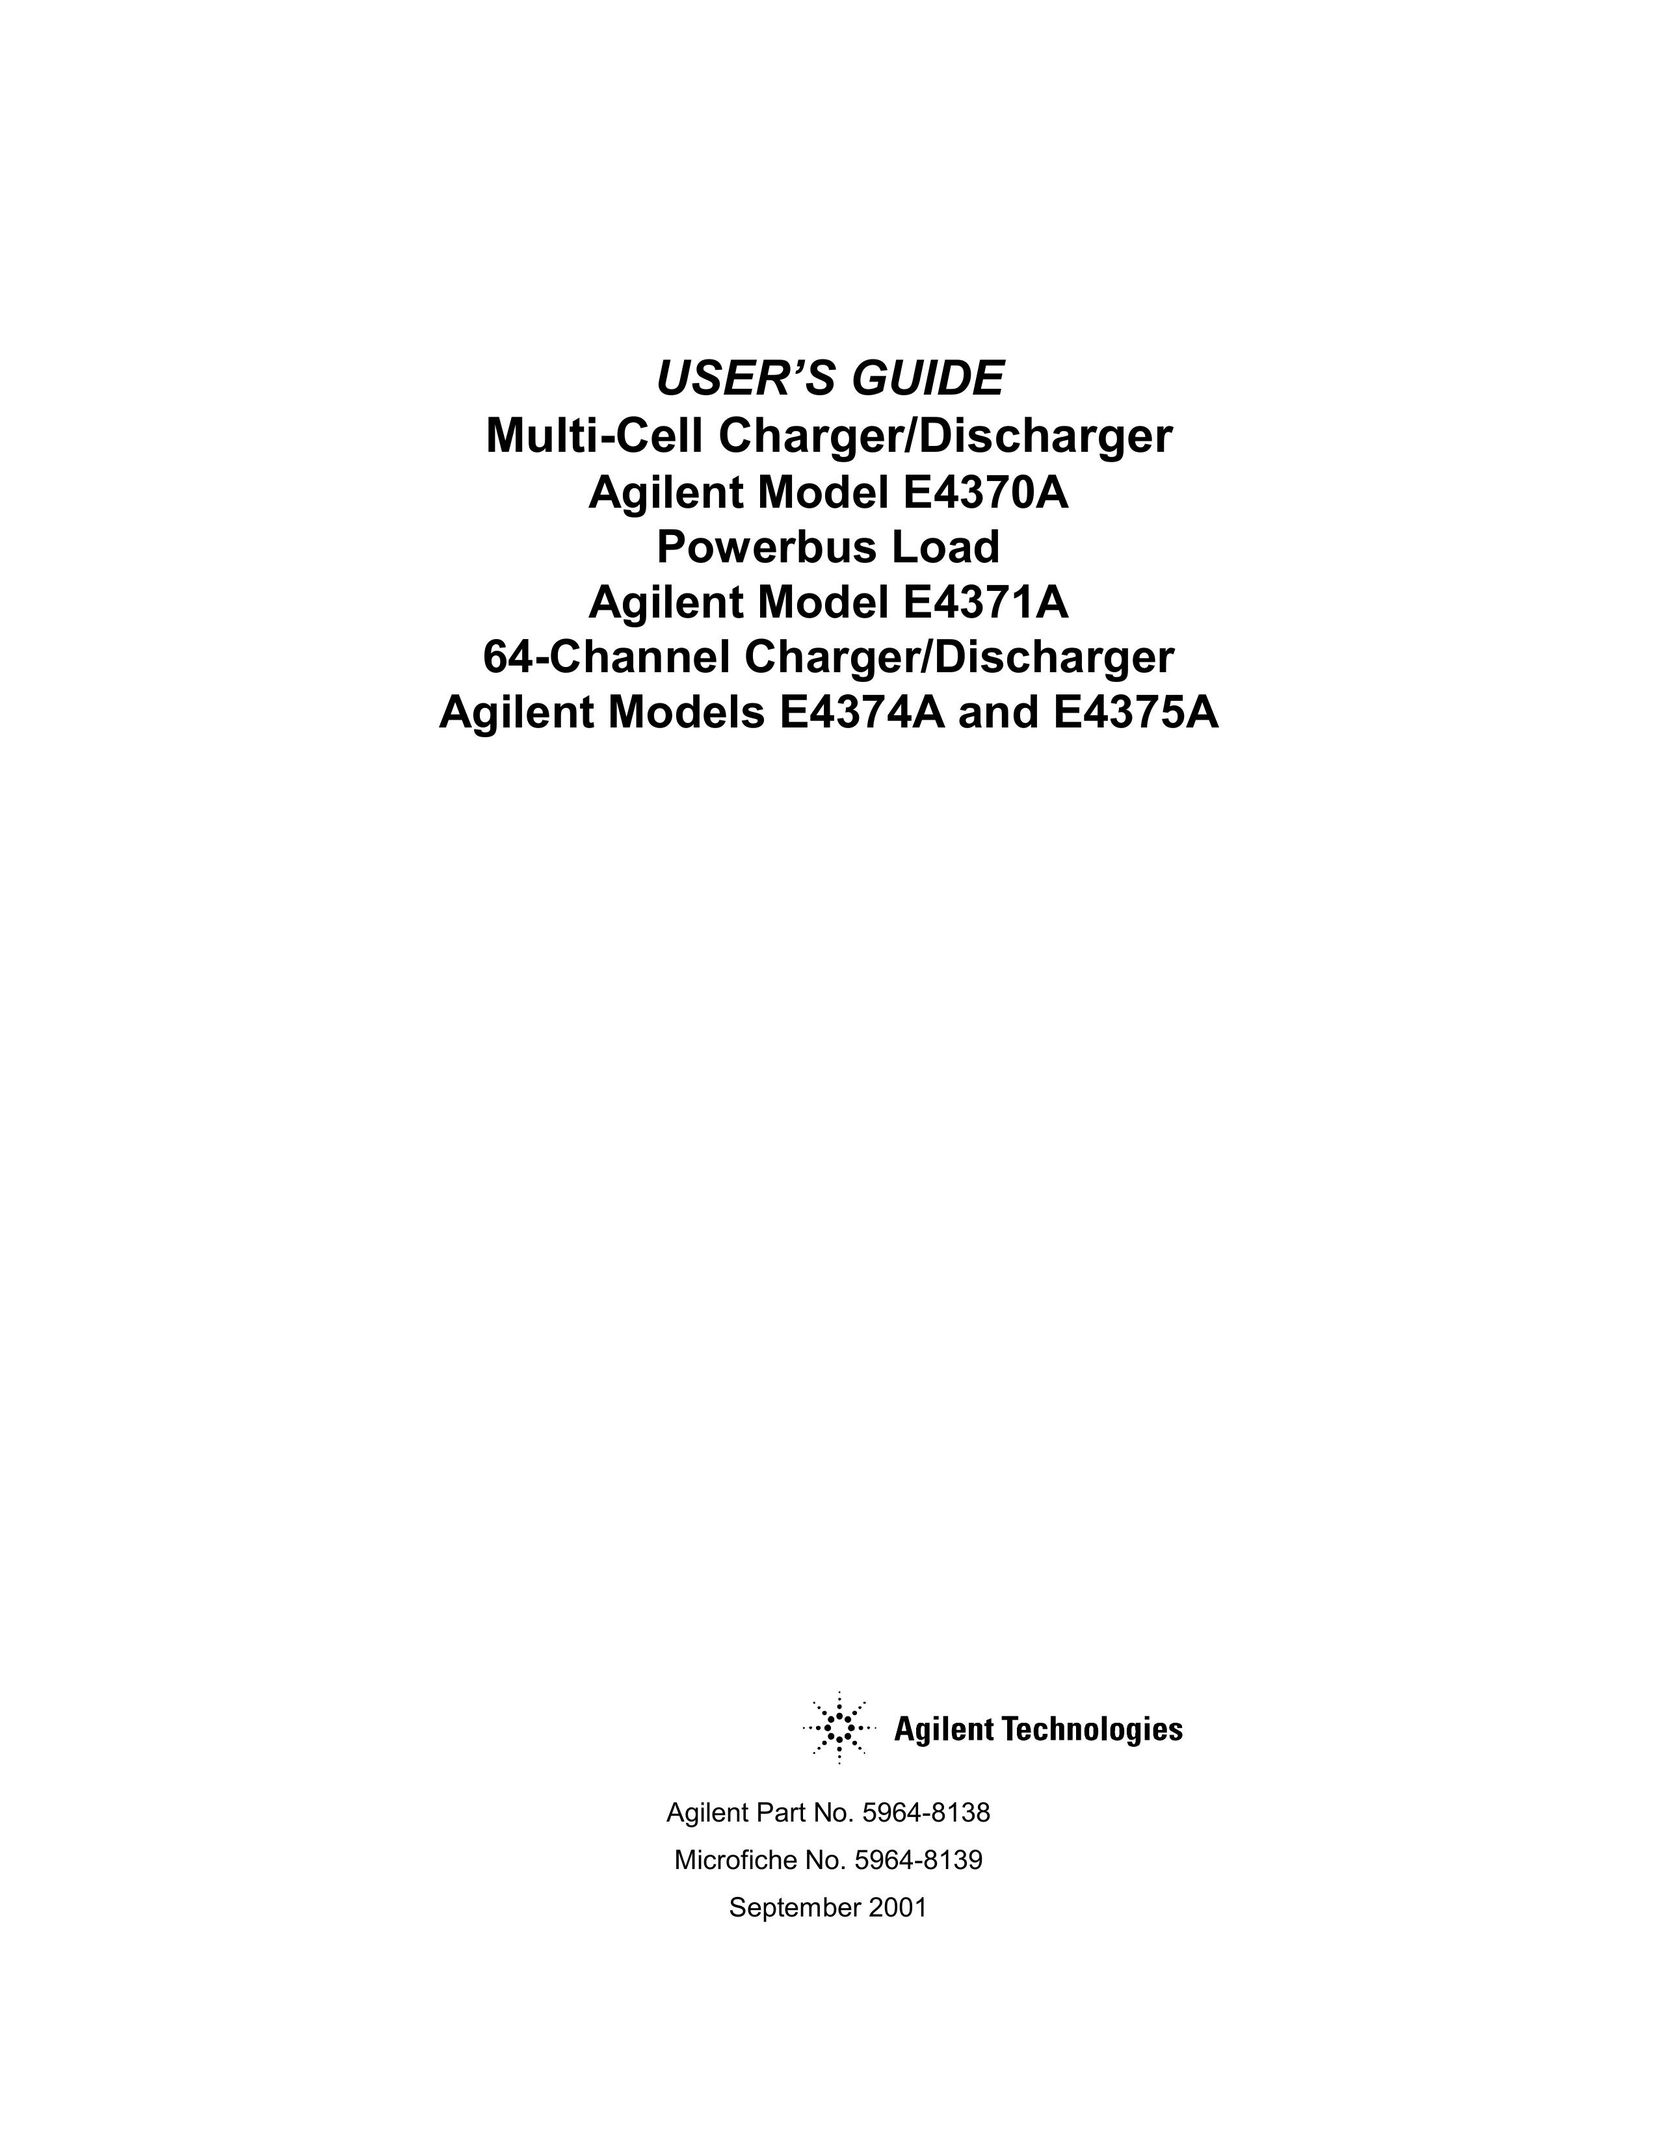 Agilent Technologies E4371A Video Gaming Accessories User Manual